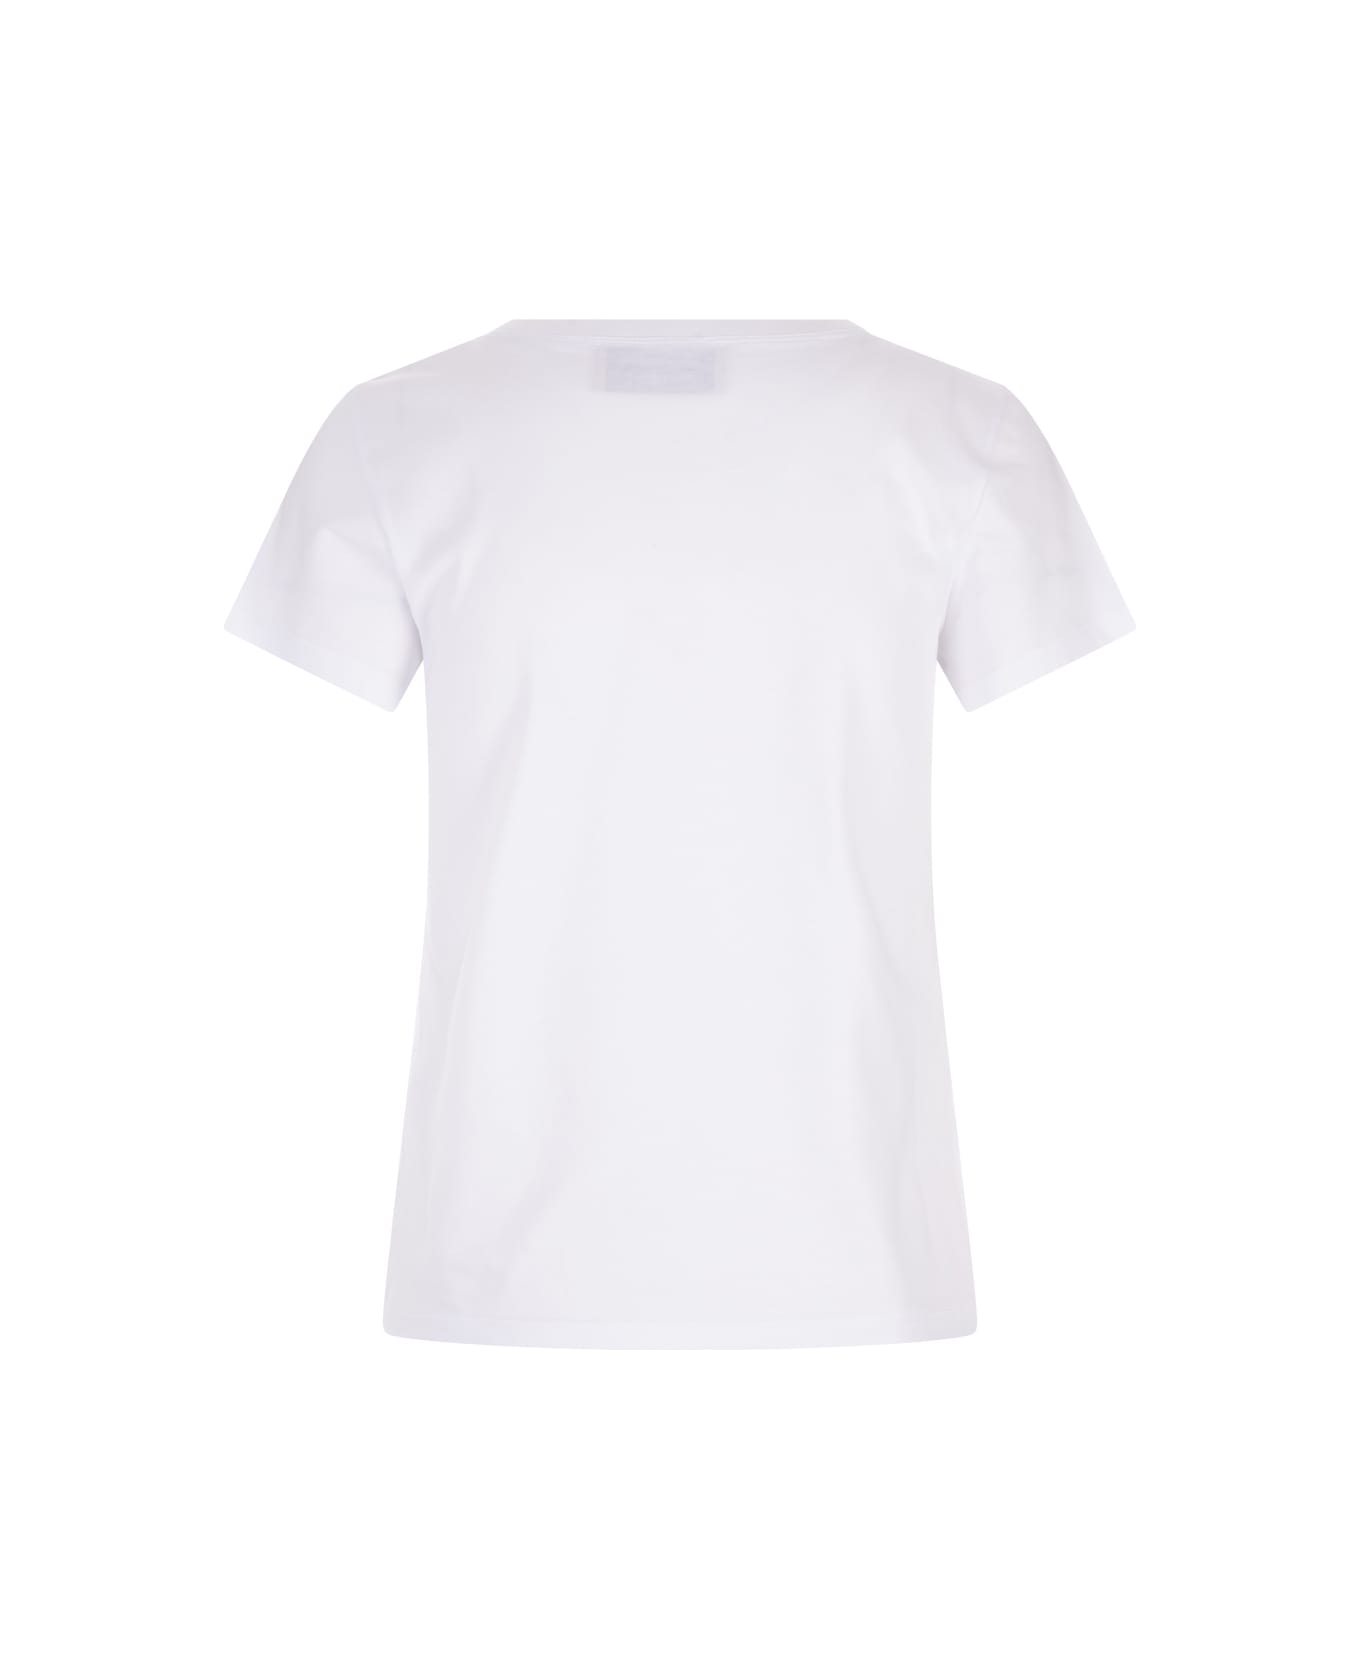 Alessandro Enriquez White T-shirt With Spaghetti Embroidery - Bianco